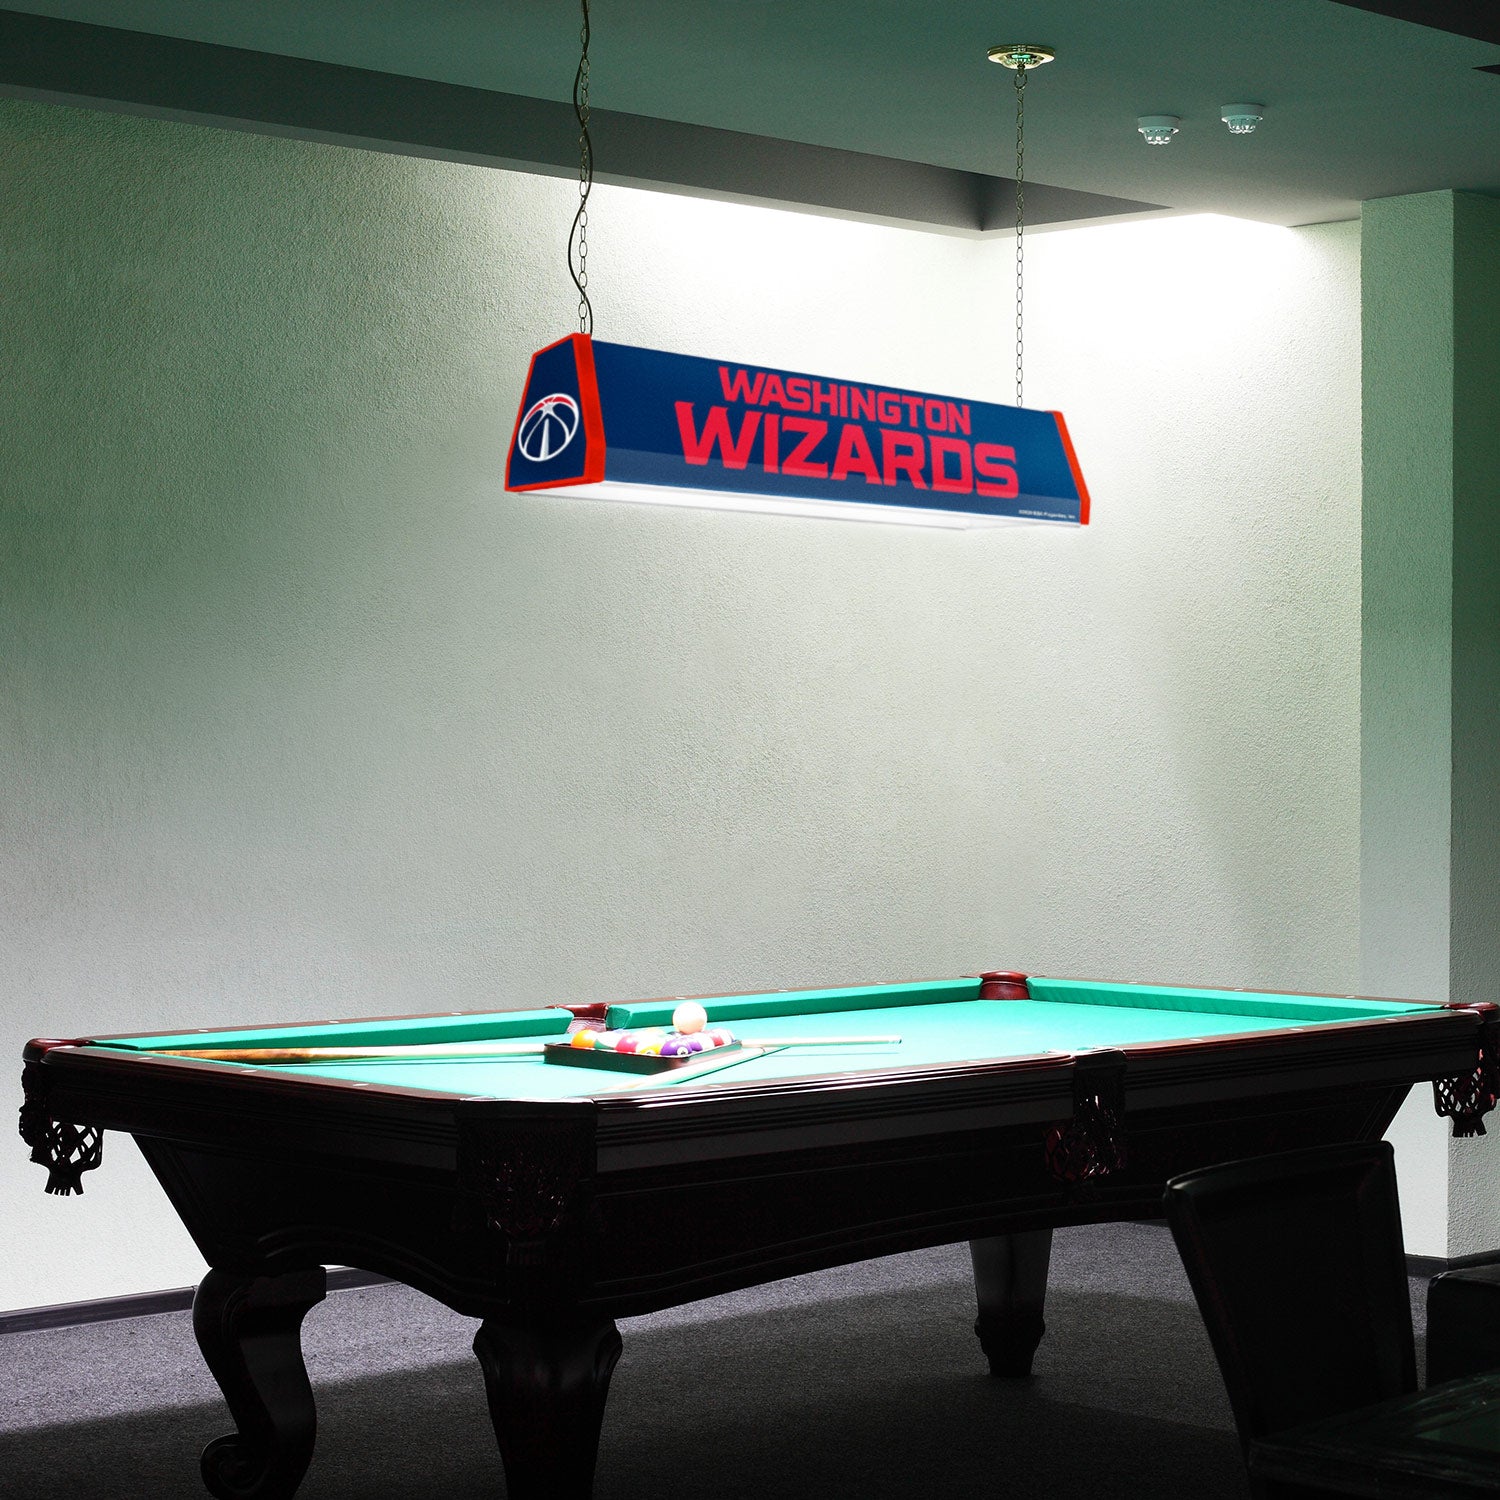 Washington Wizards Standard Pool Table Light Room View